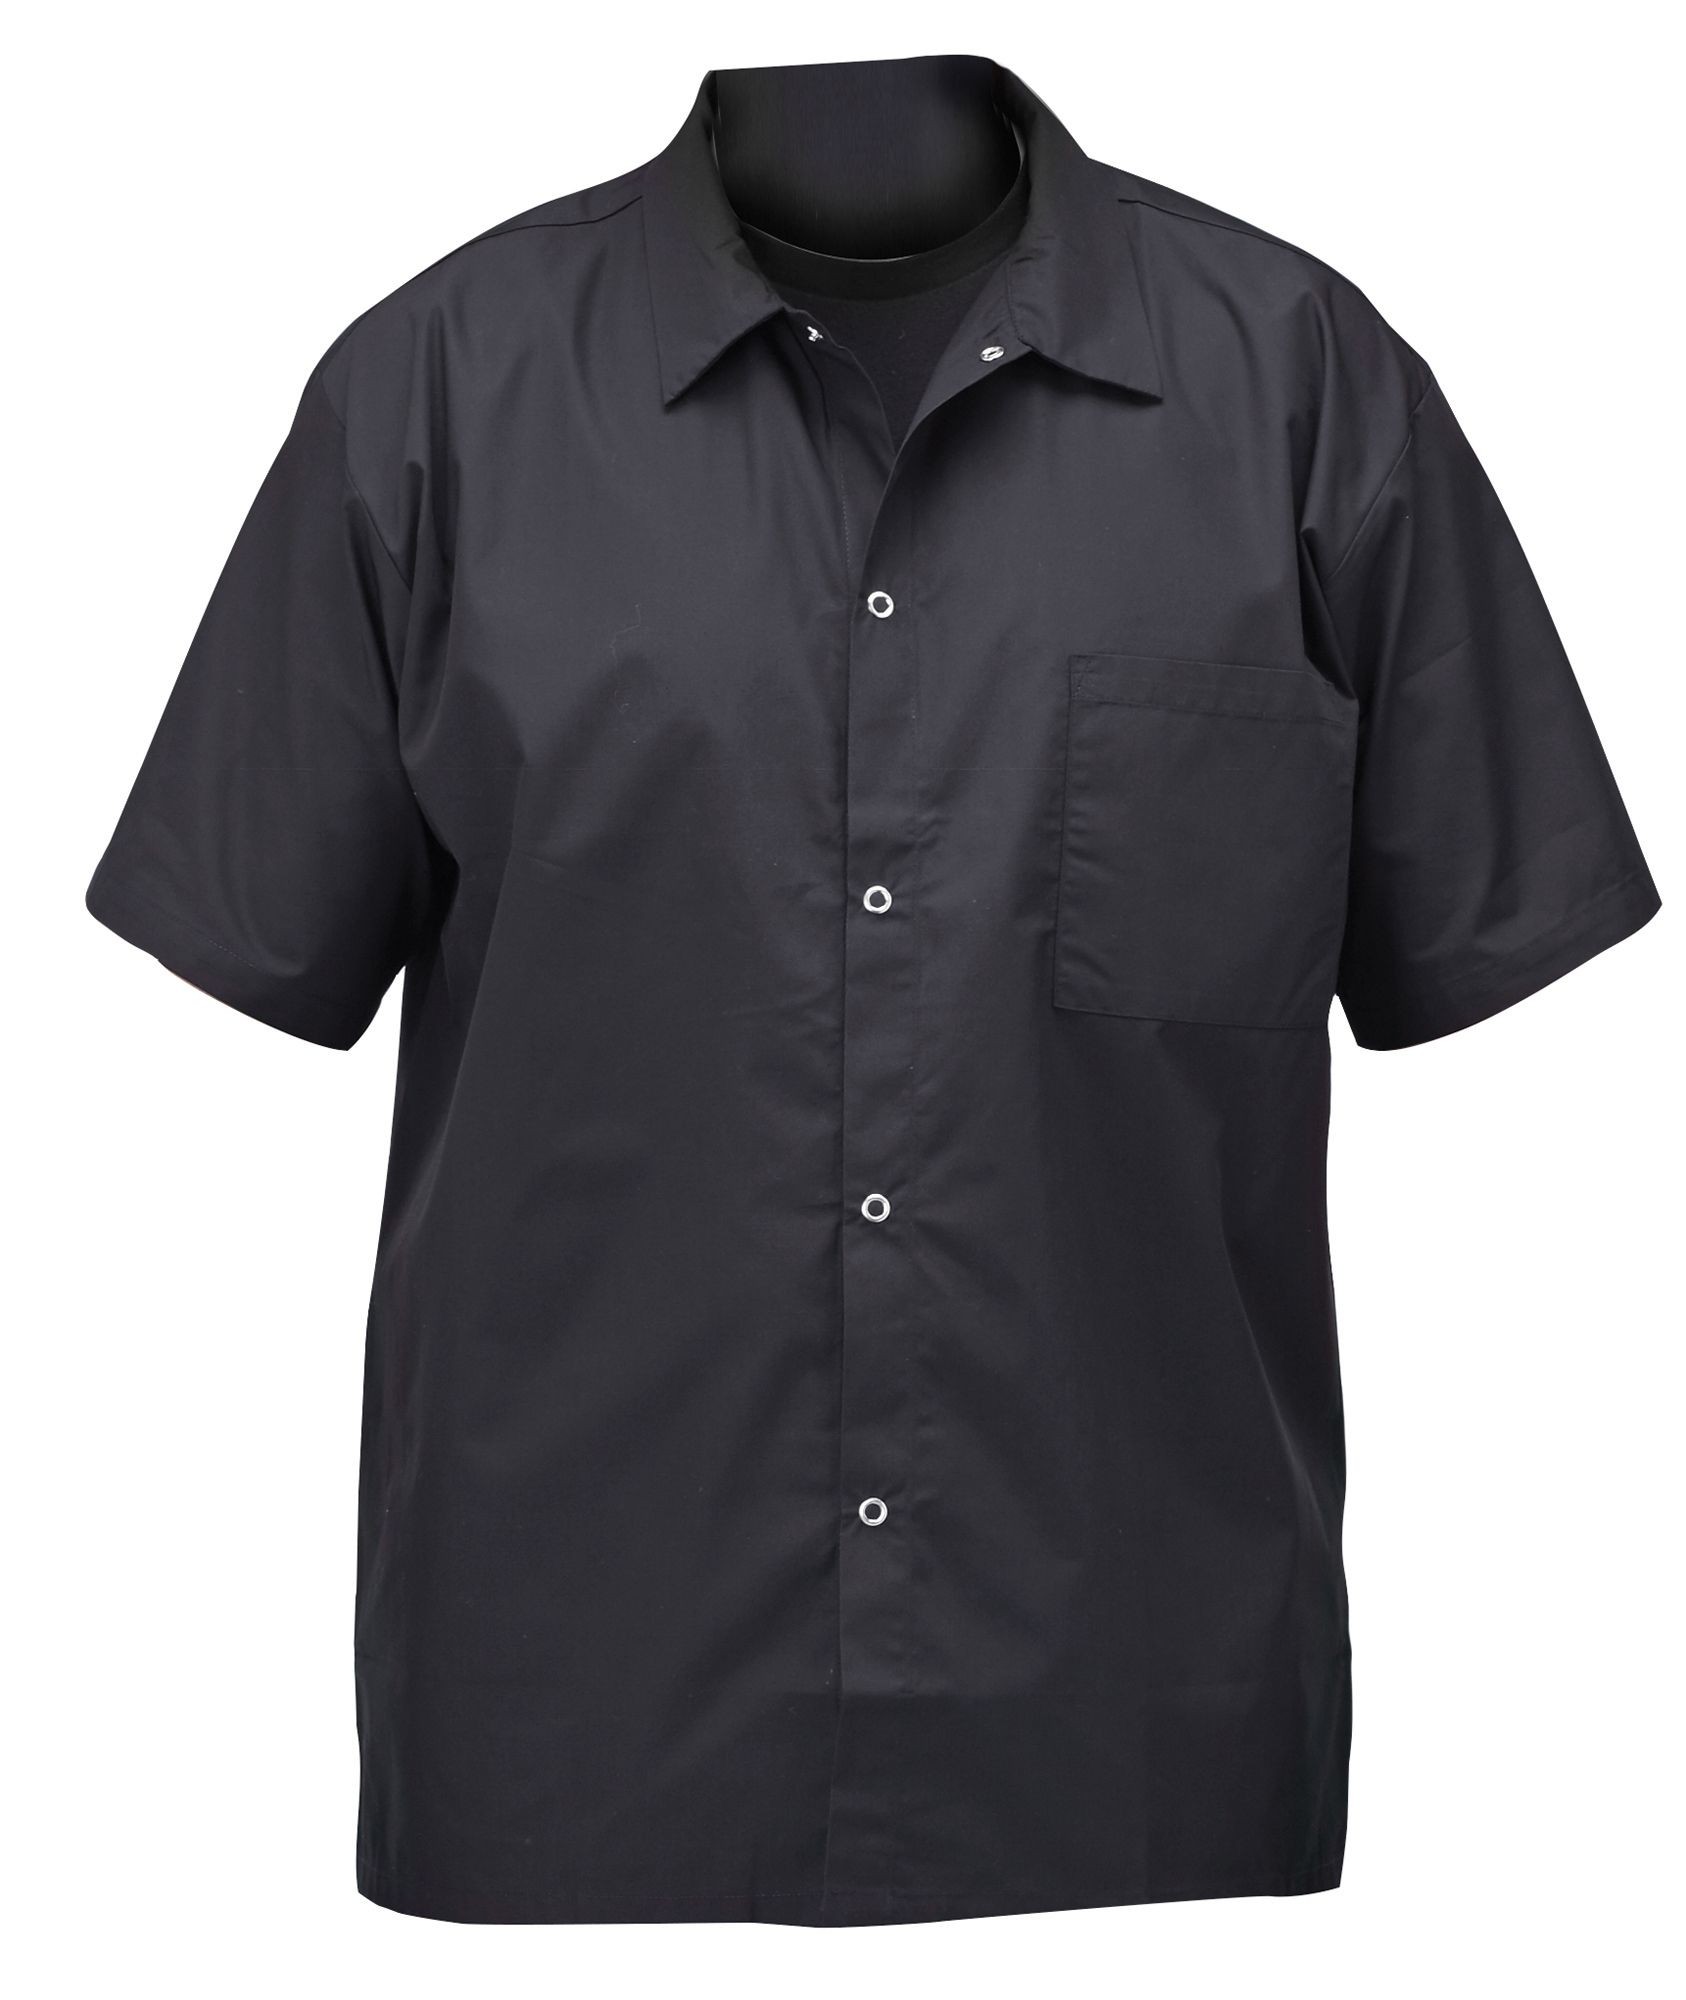 Winco UNF-1KM Black Poly-Cotton Blend Short Sleeved Chef Shirt, Medium